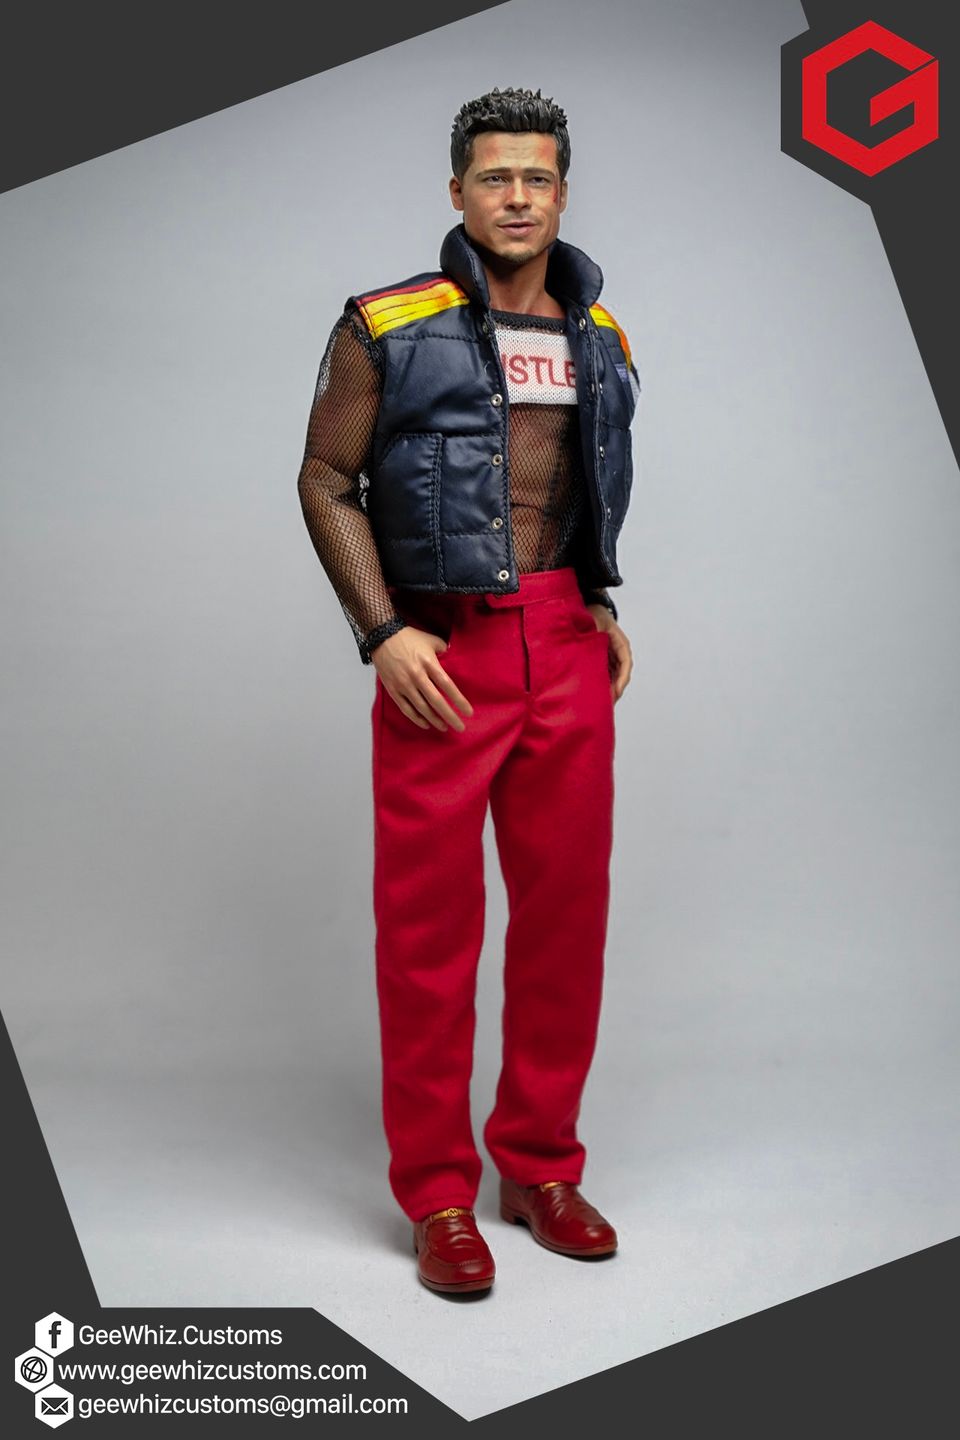 Geewhiz Customs: 1:6 Scale Tyler Durden Hustler Outfit with Vest